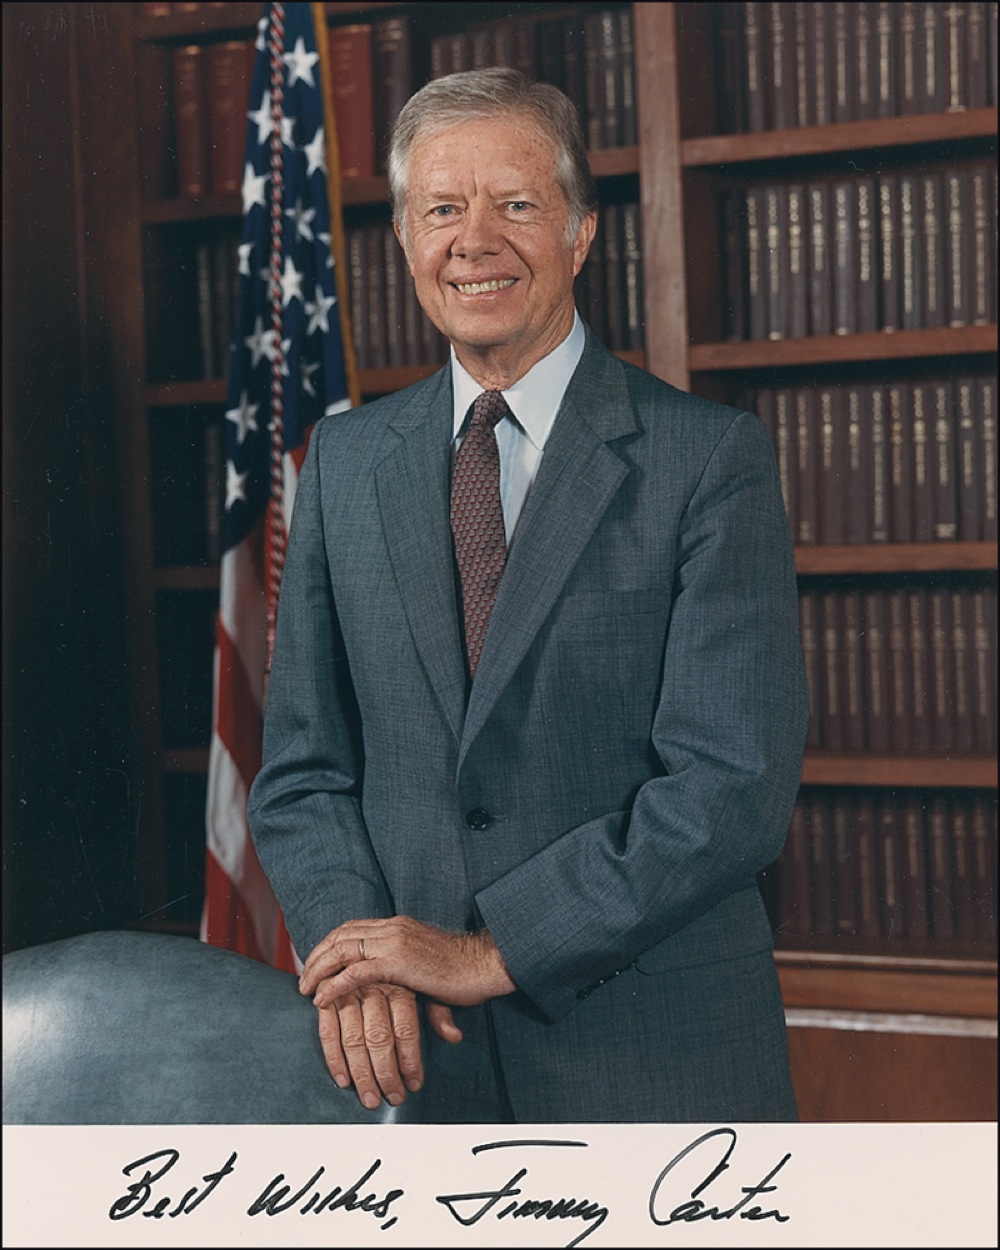 Lot #17 Jimmy Carter